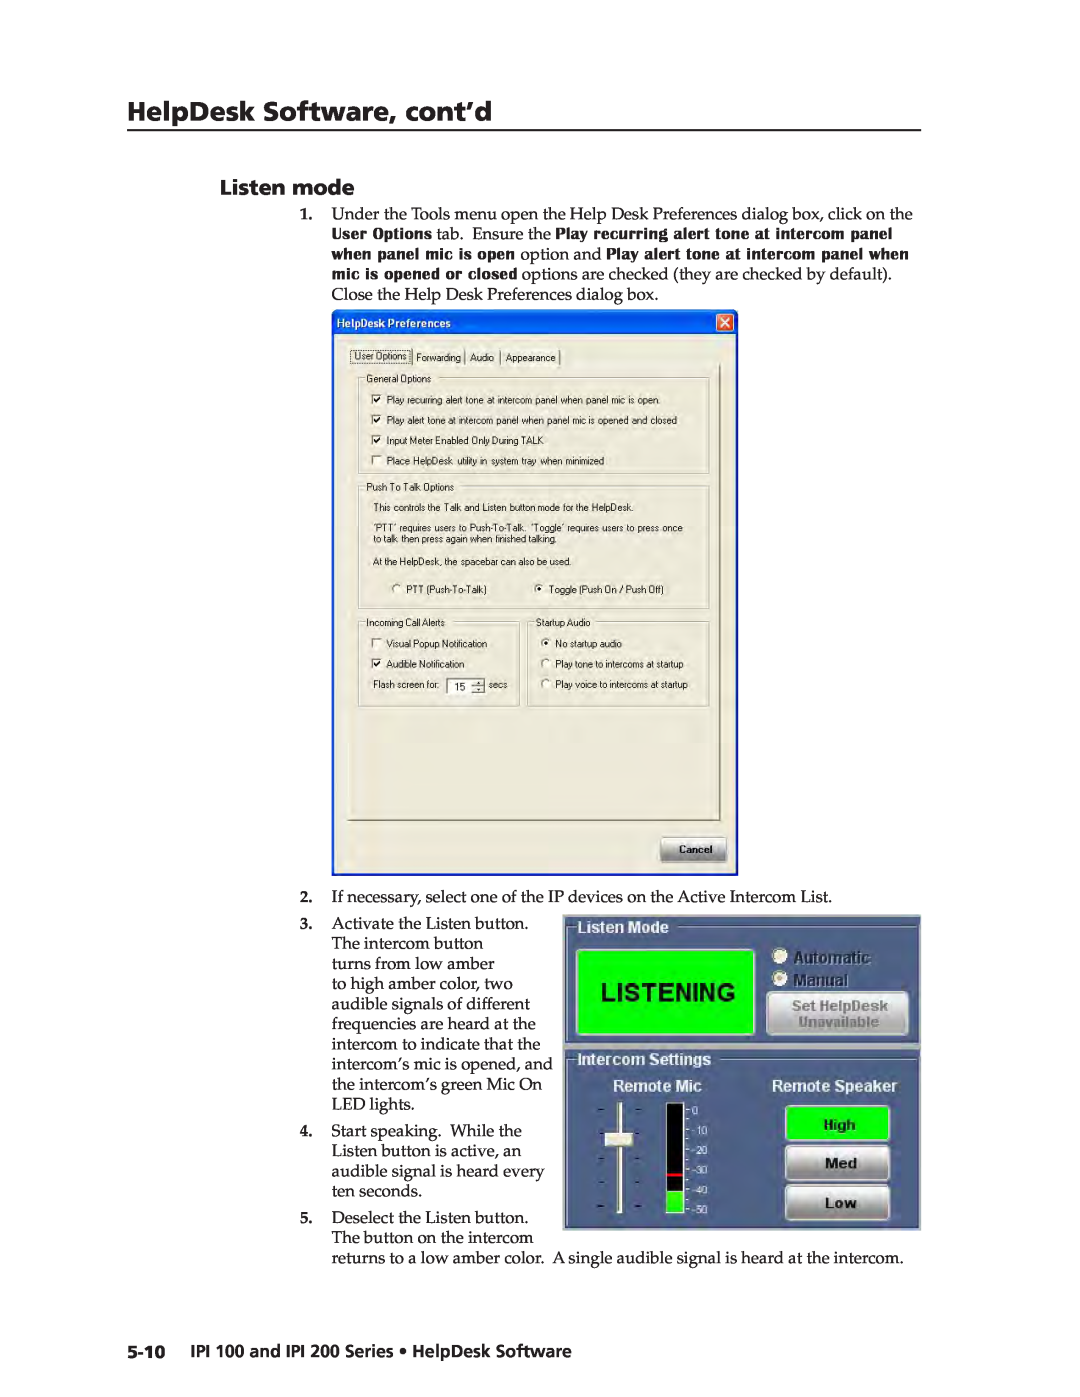 Extron electronic manual Listen mode, HelpDesk Software, cont’d, IPI 100 and IPI 200 Series HelpDesk Software 